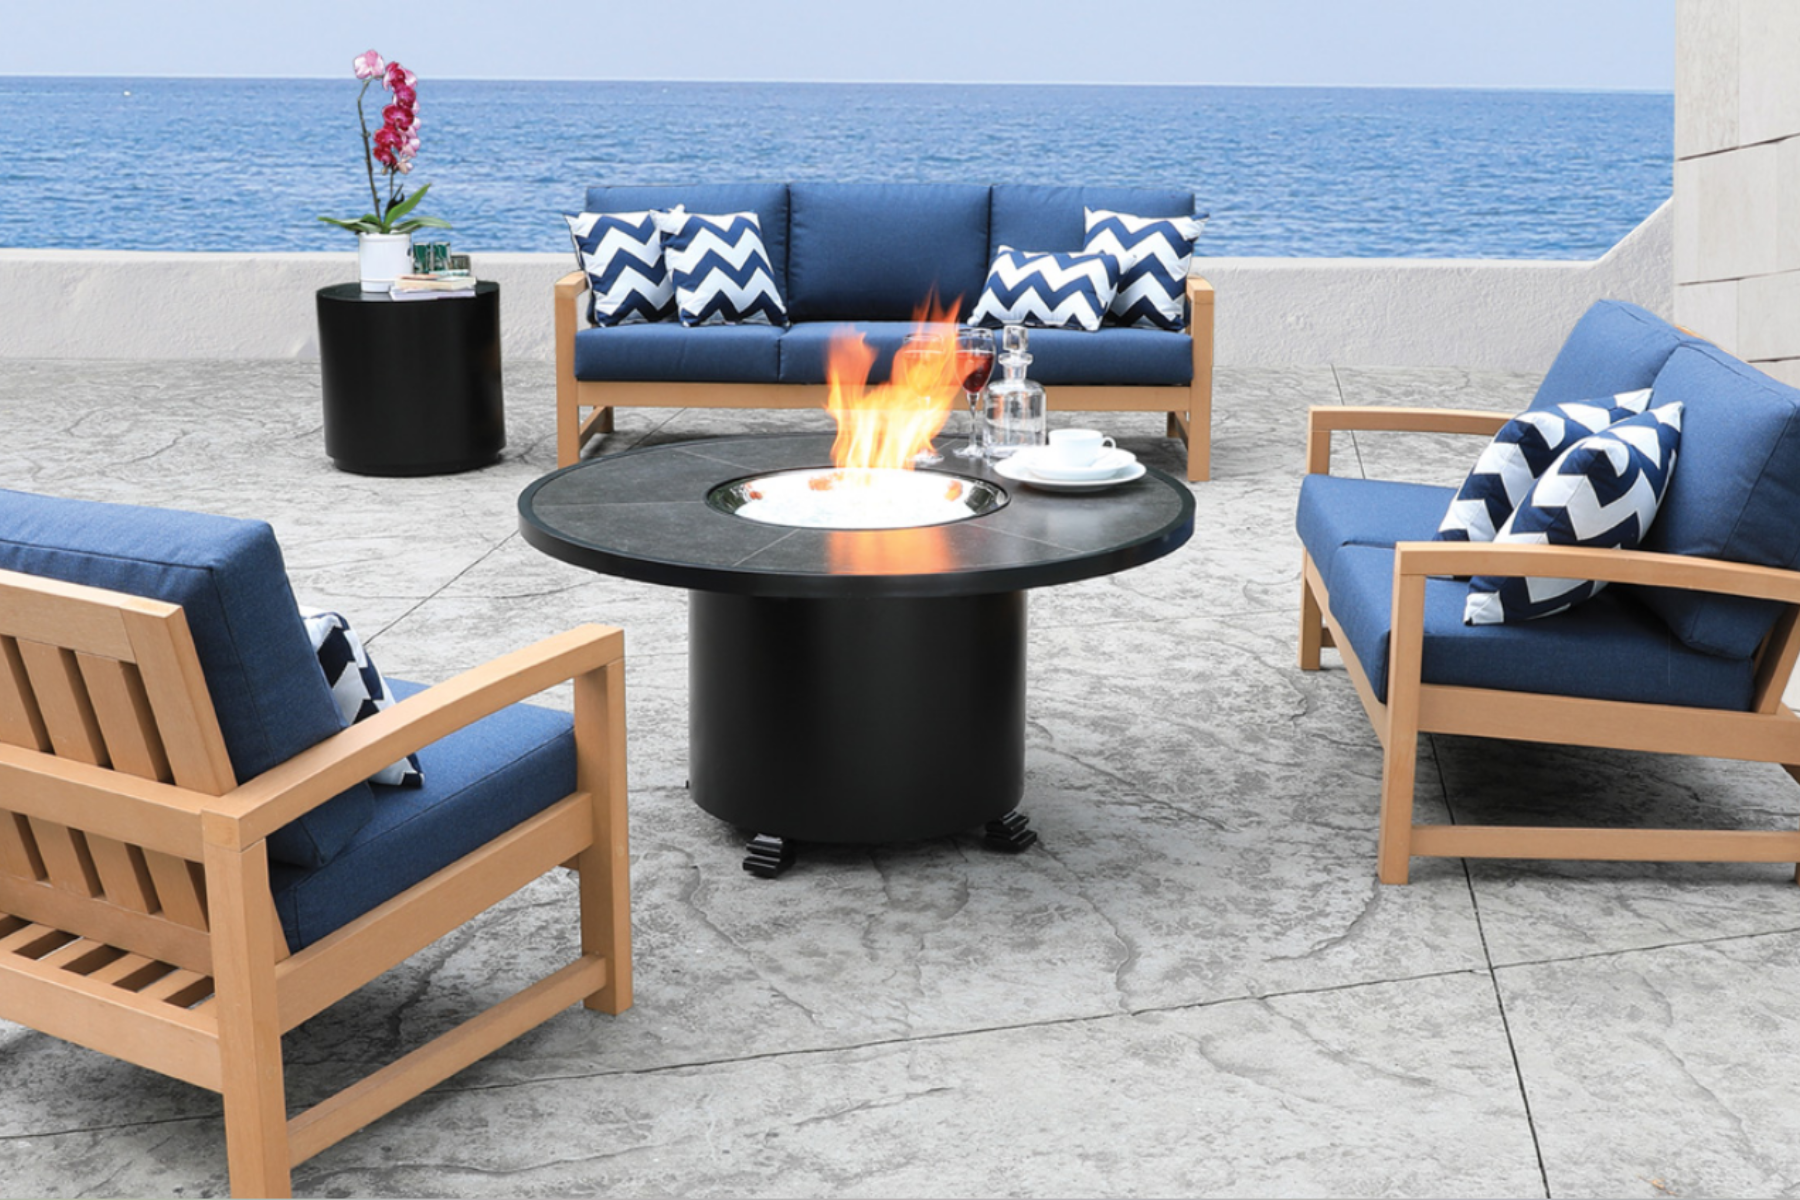 Nautical inspired patio set by Cabana Coast